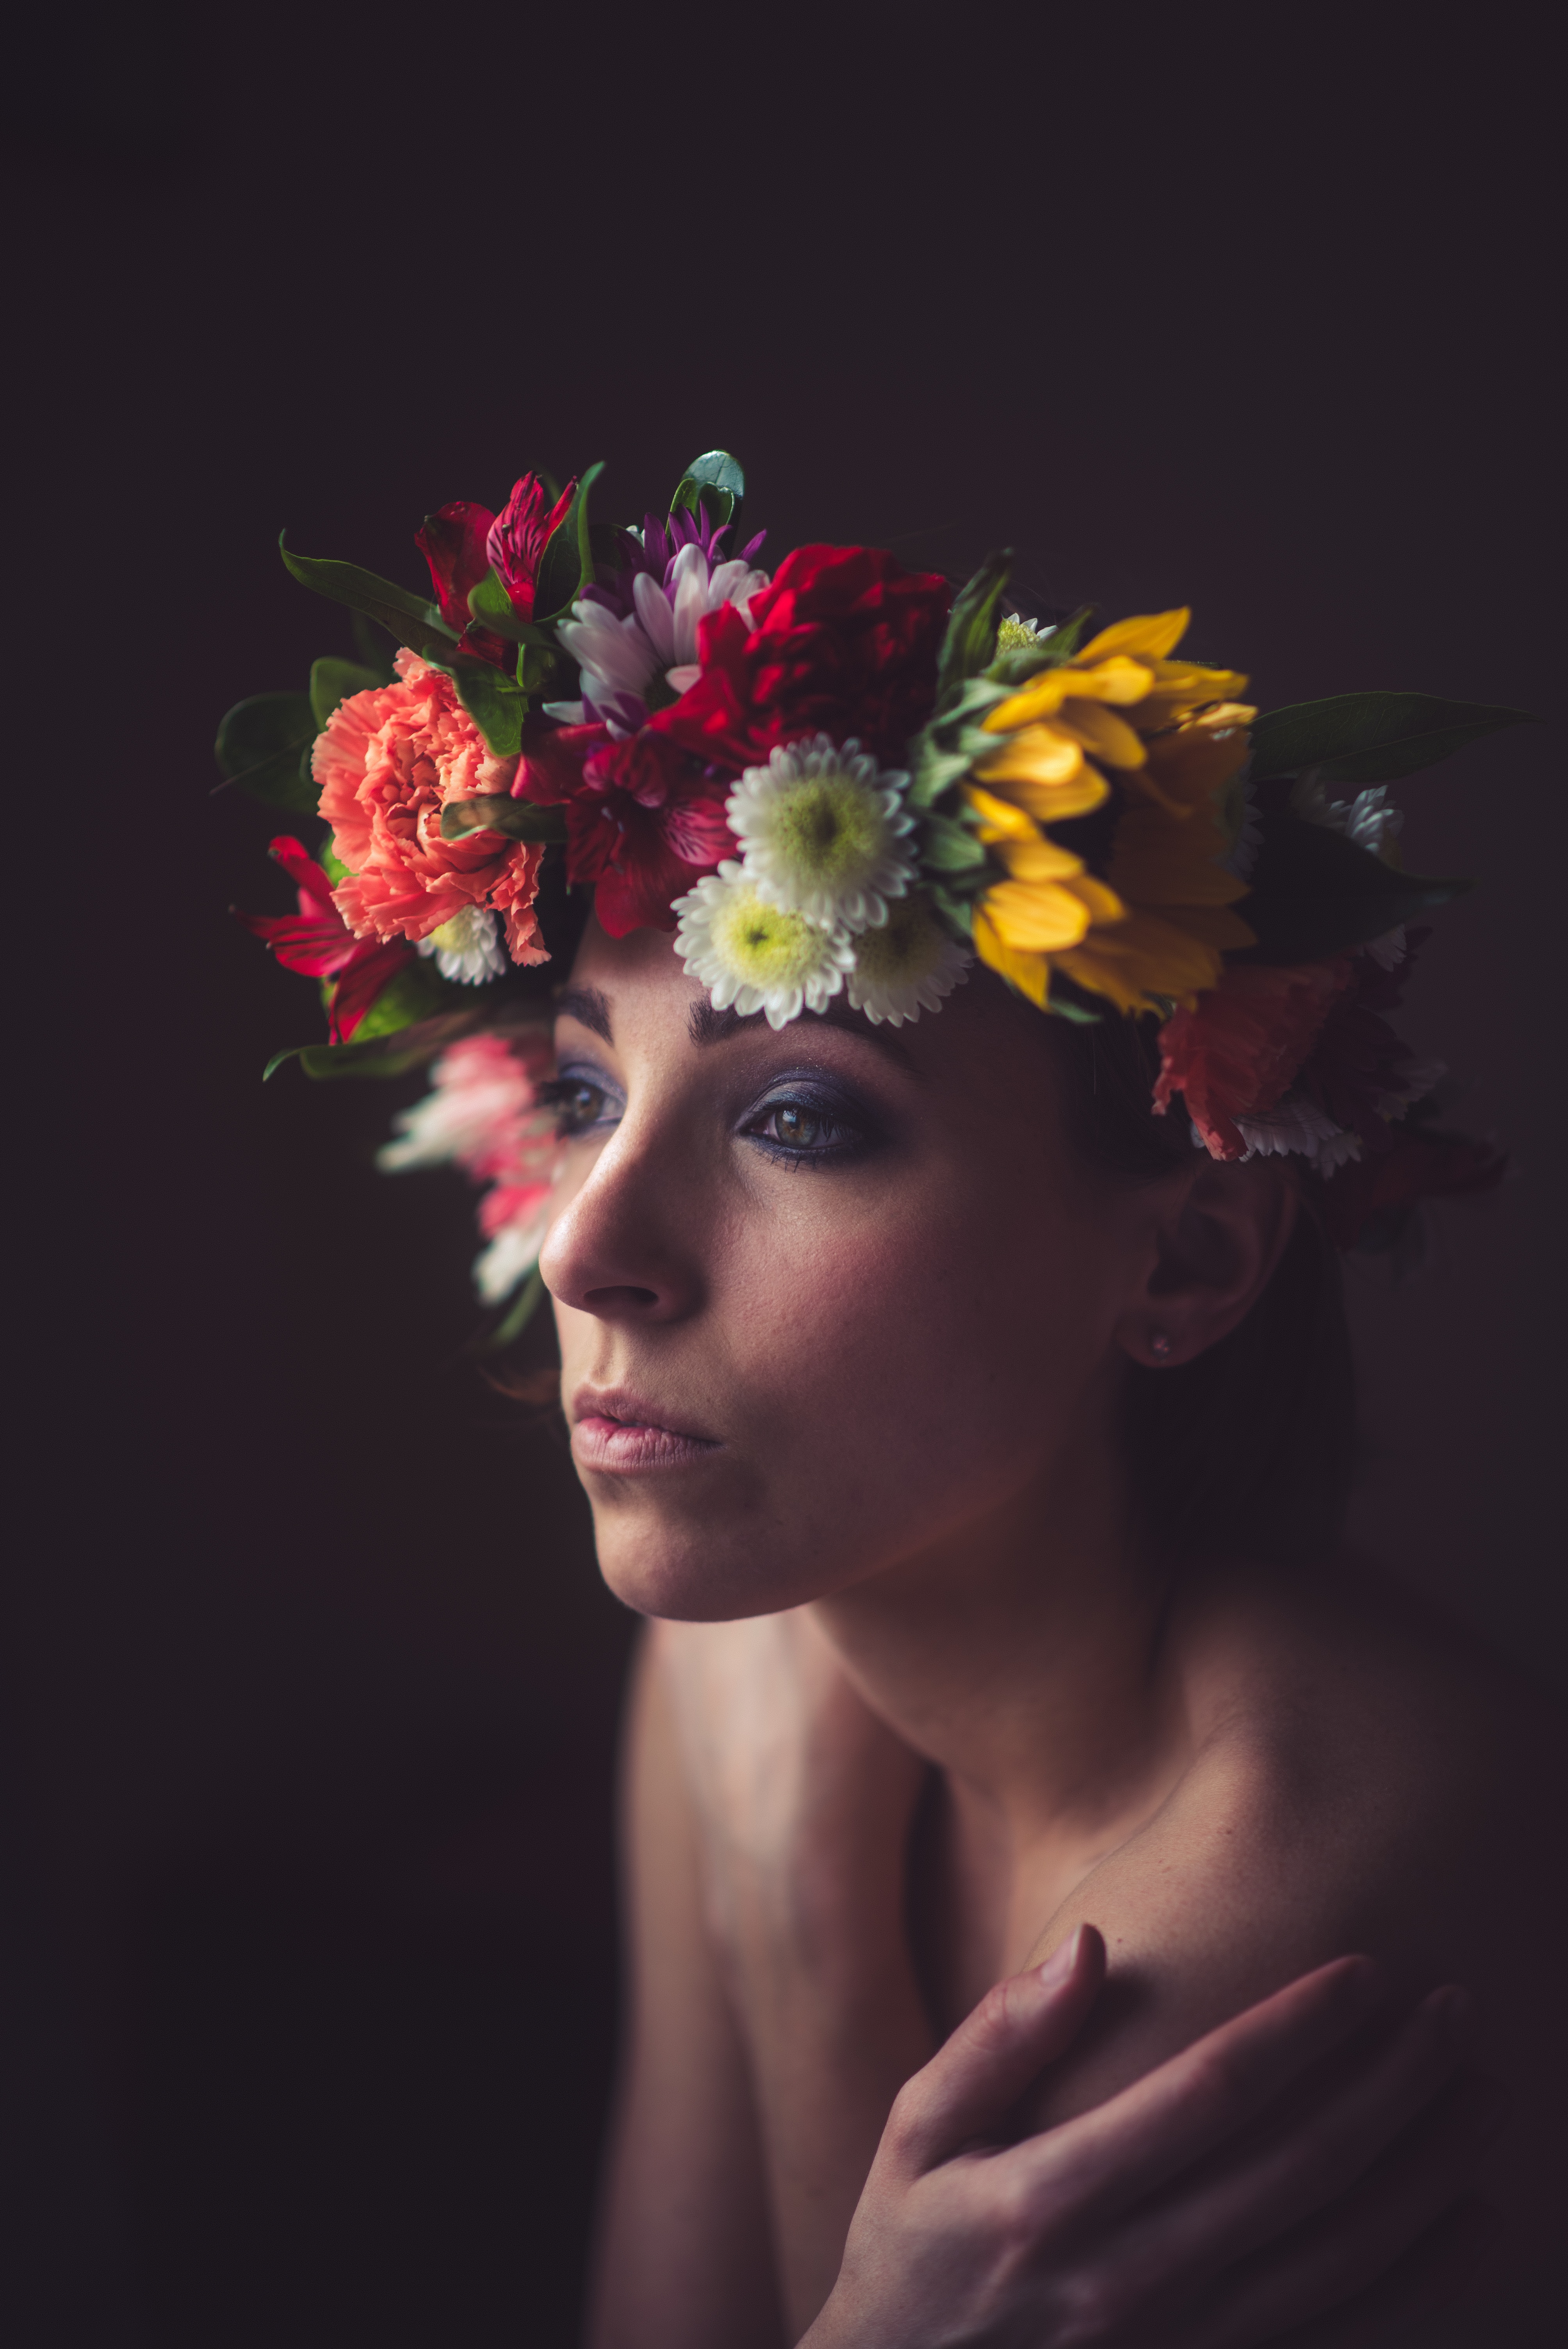 A woman wearing a flower crown. | Source: Pexels